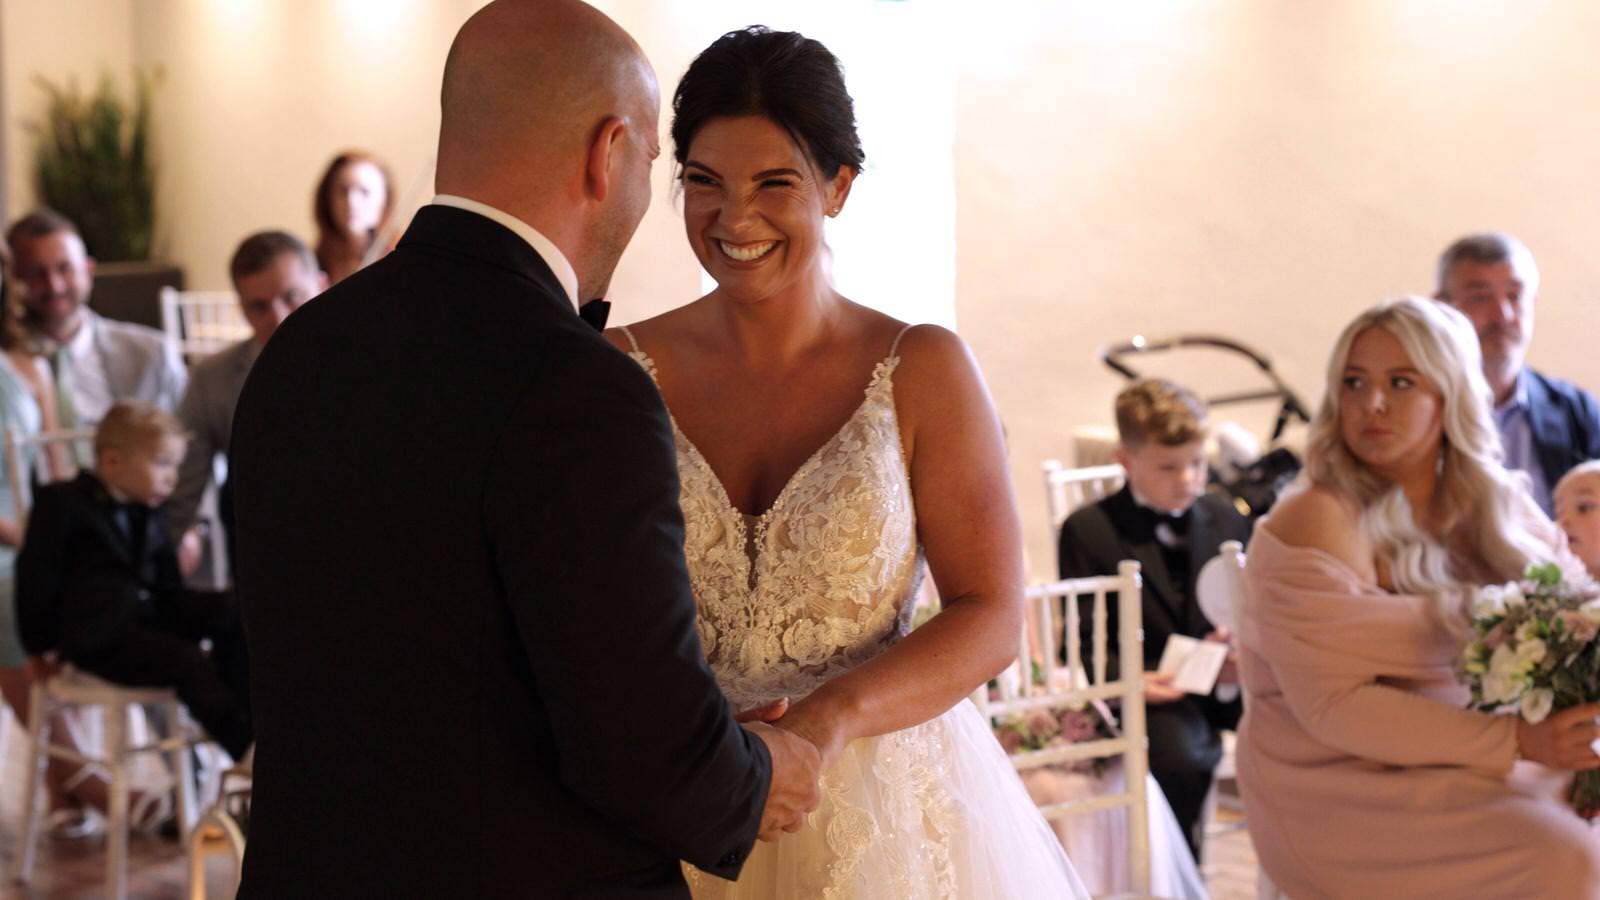 bride smiles at groom as they exchange wedding rings